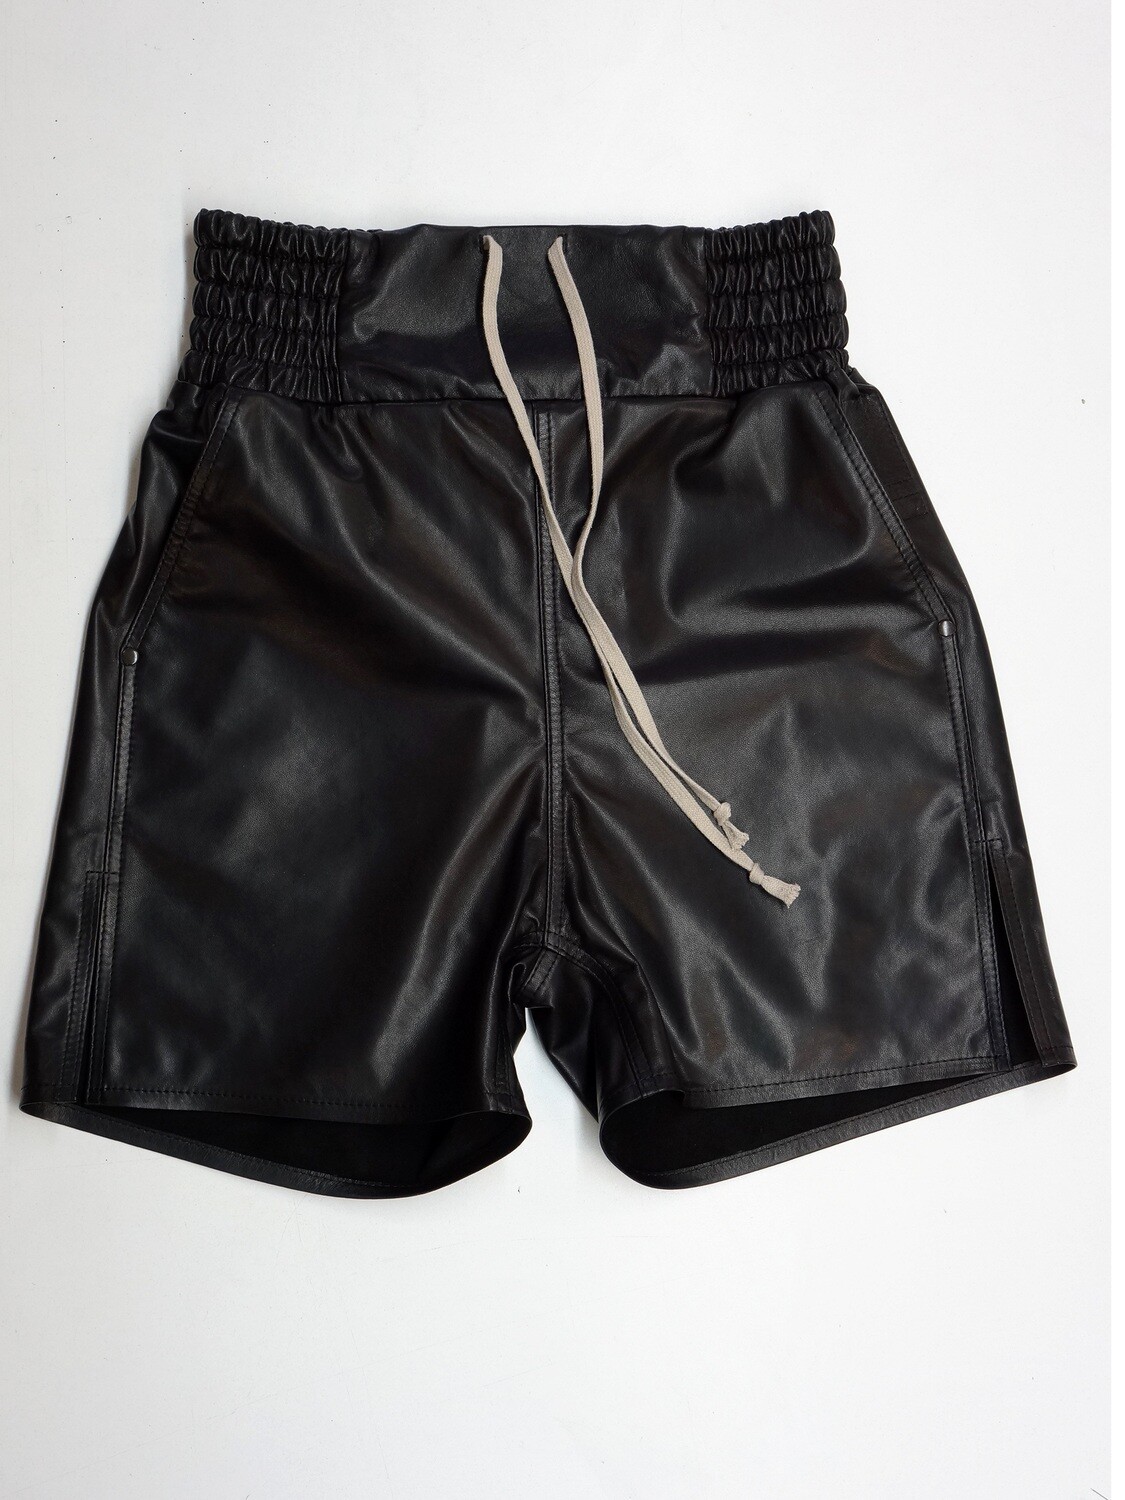 Leather boxer shorts